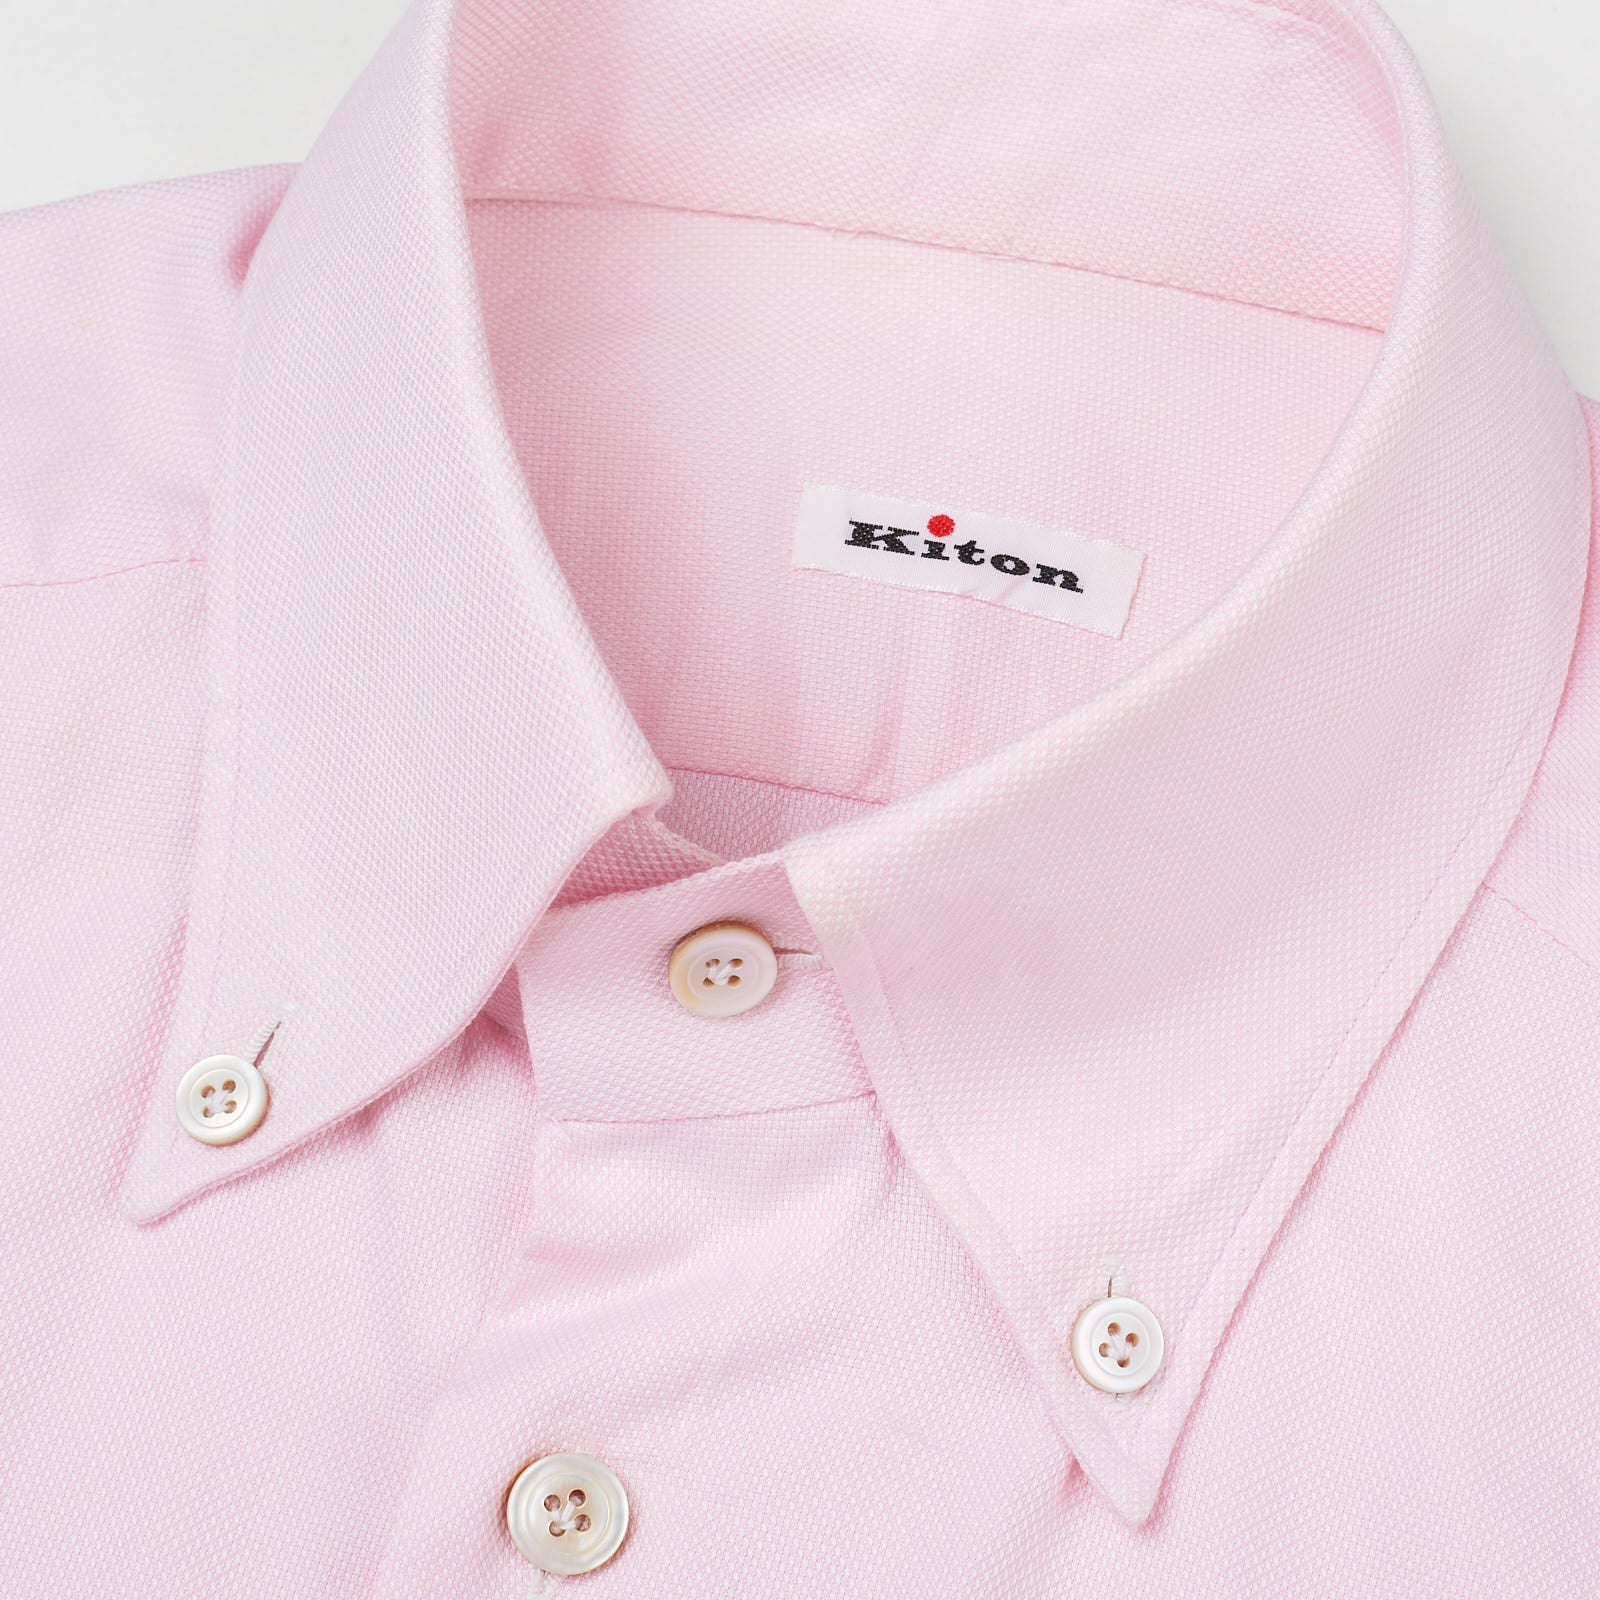 KITON Napoli Handmade Bespoke Pink Oxford Cotton Button-Down Shirt EU 39 US 15.5 KITON